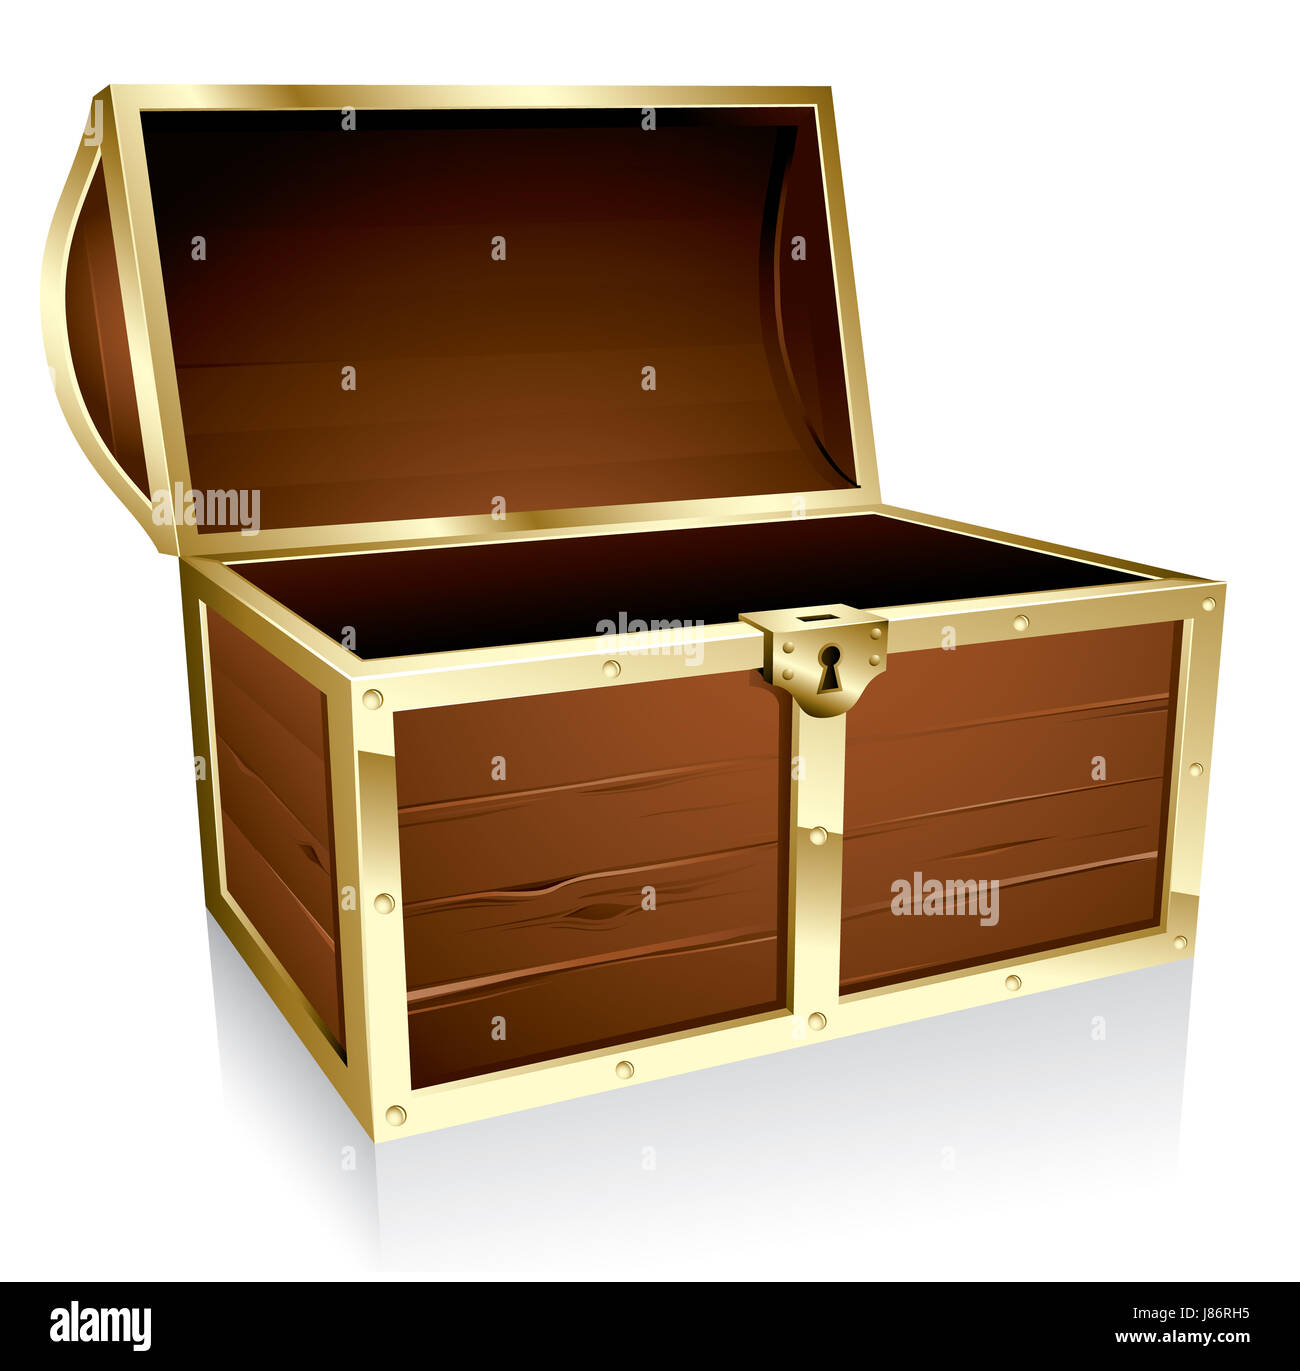 https://c8.alamy.com/comp/J86RH5/illustration-chest-empty-treasure-design-lock-object-isolated-wood-J86RH5.jpg